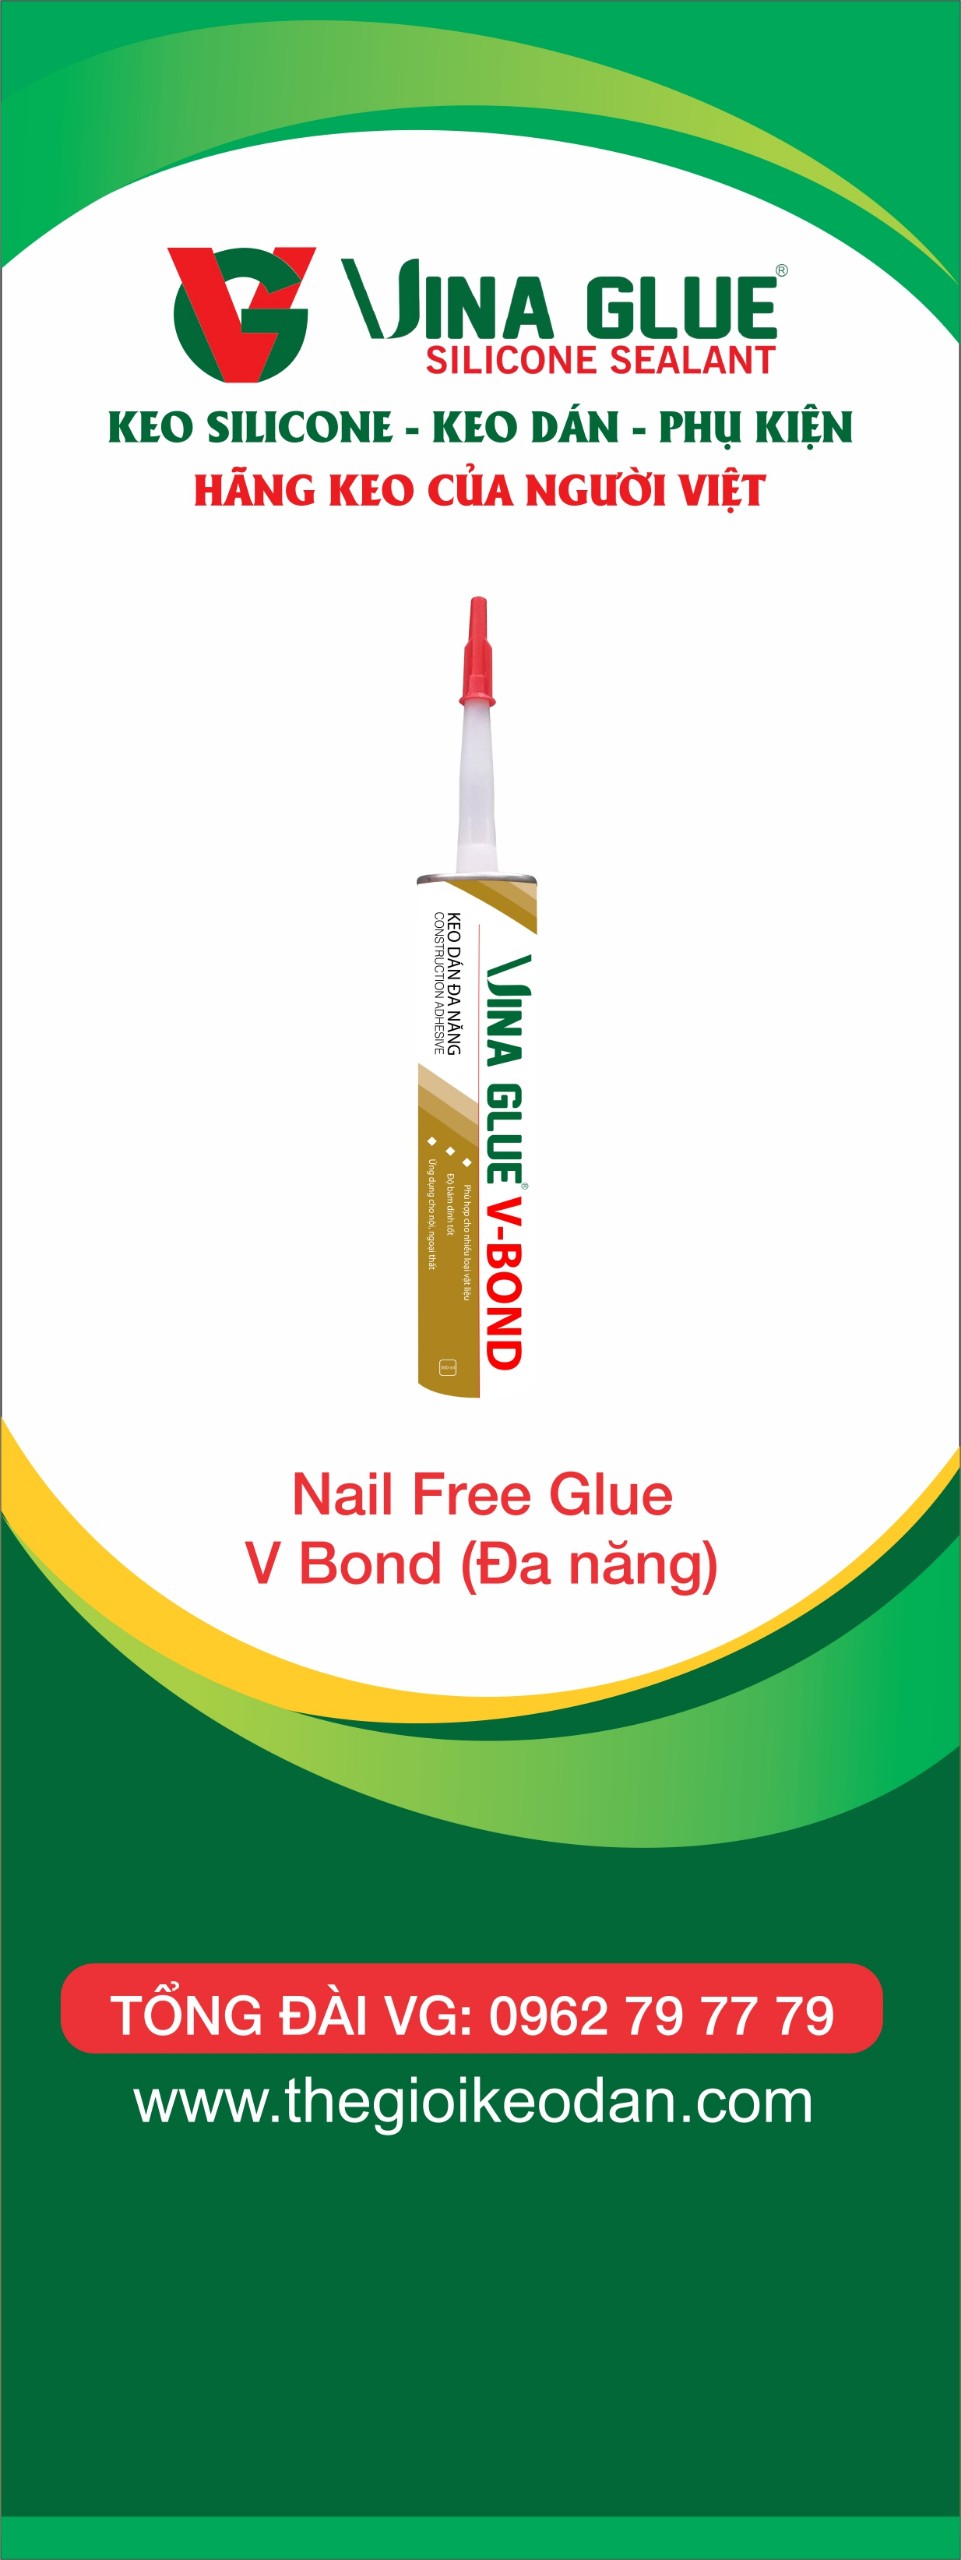 Nail Free Glue V Bond (Đa Năng) - Keo Silicone VINA GLUE